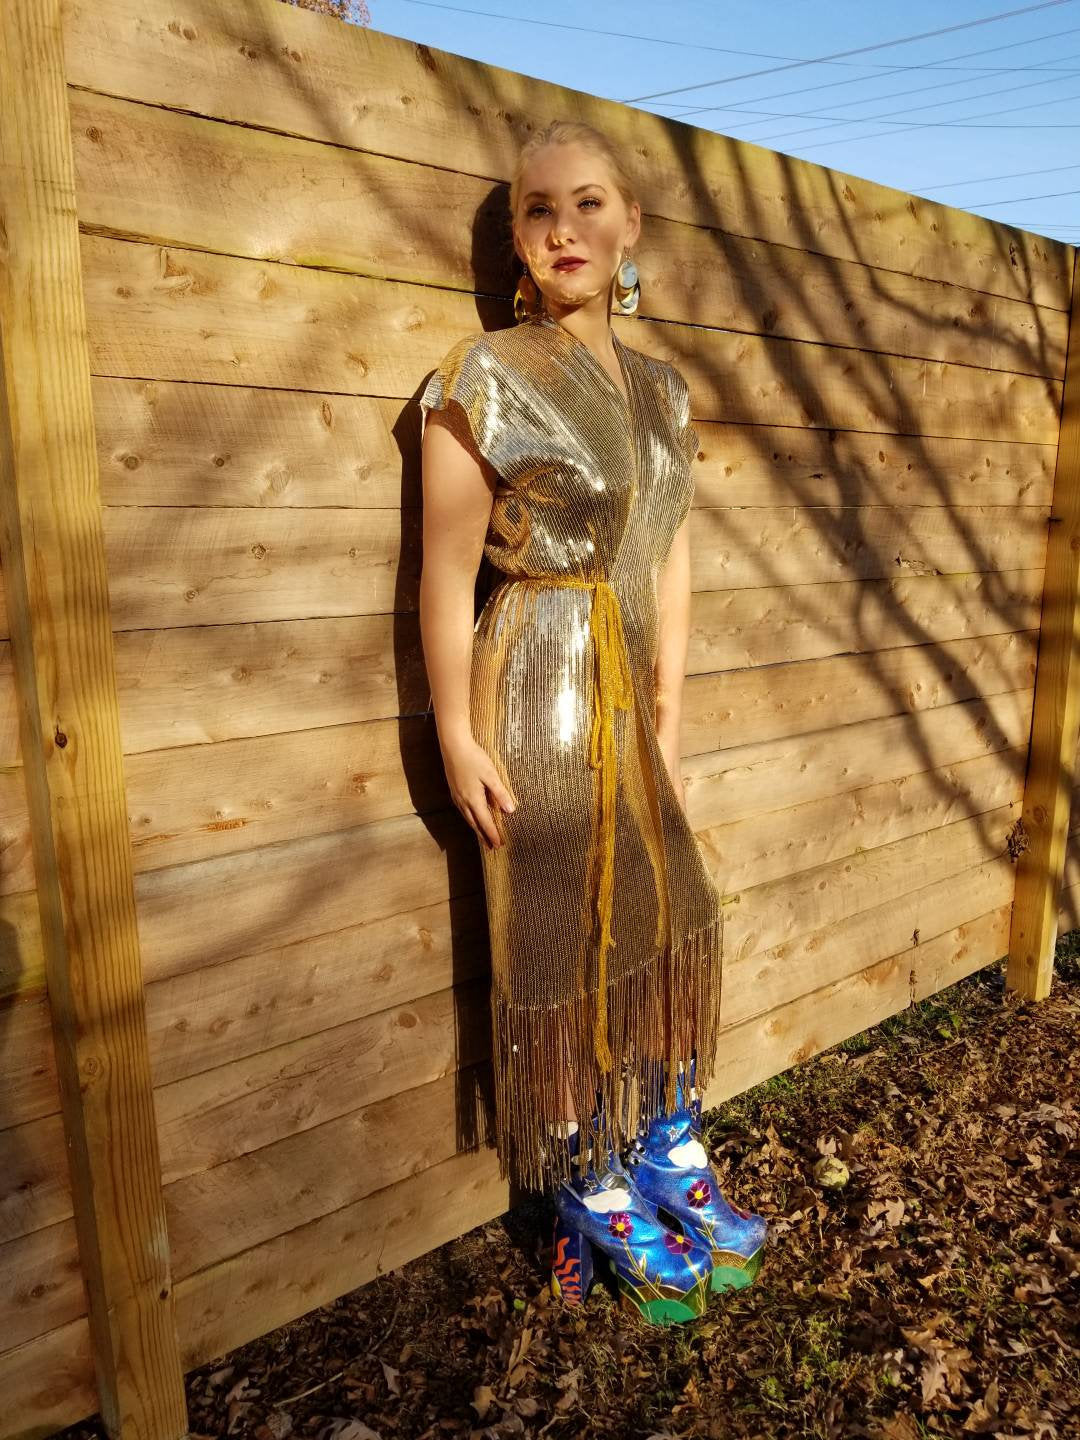 Gold Sequin Fringe Wrap Dress / New Years Eve / Holiday 2020 Midi